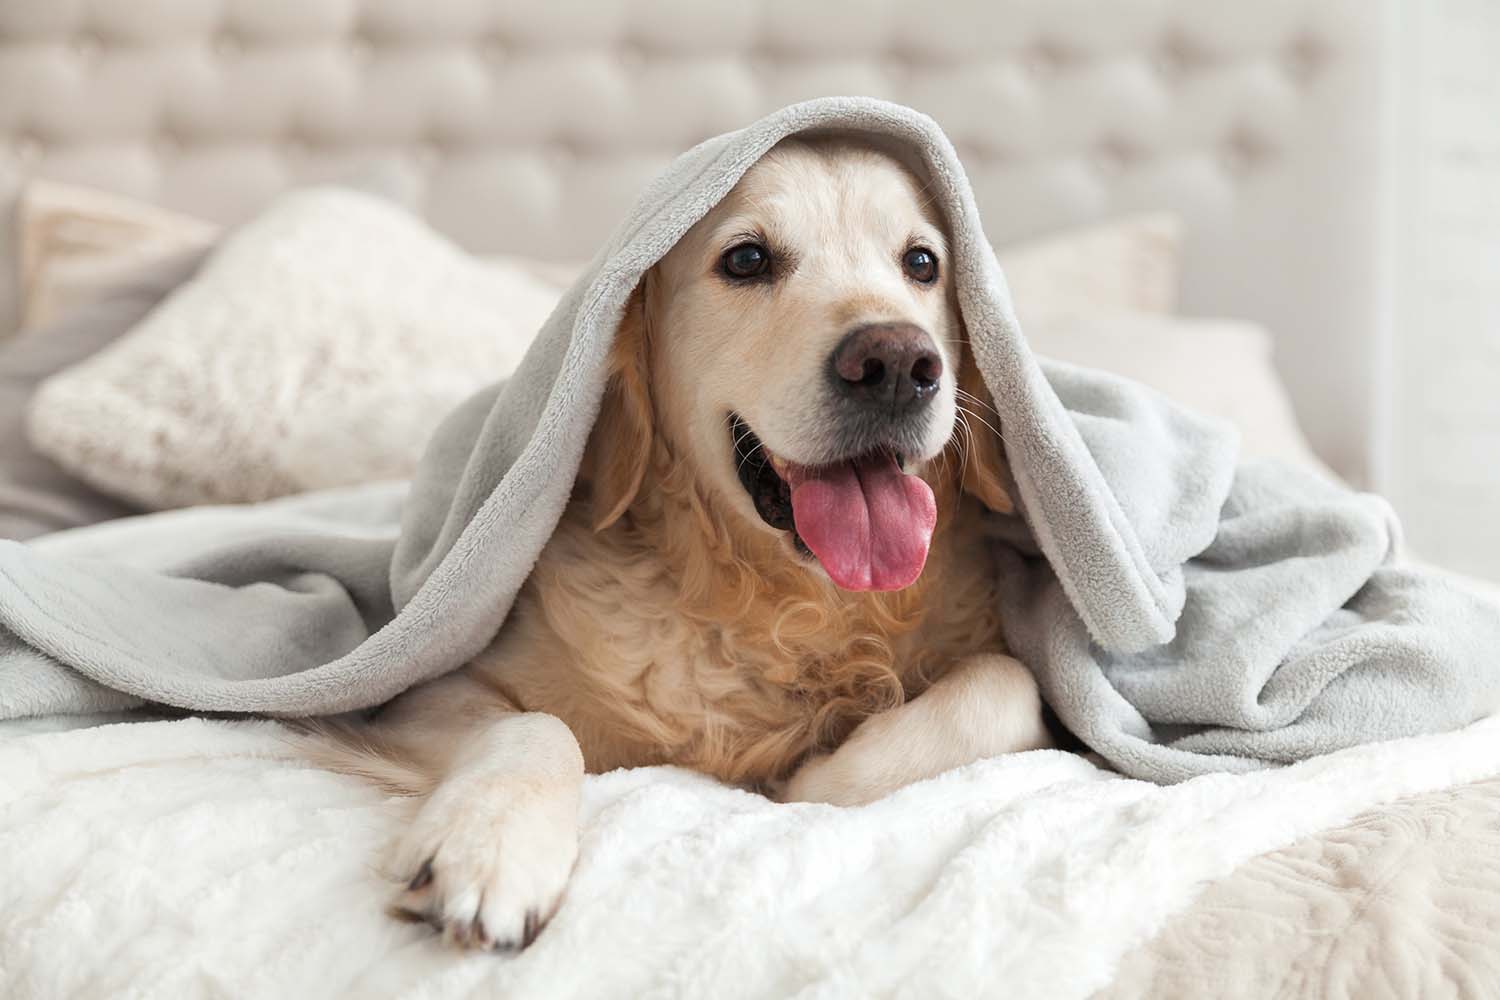 Dog Cuddling Blanket